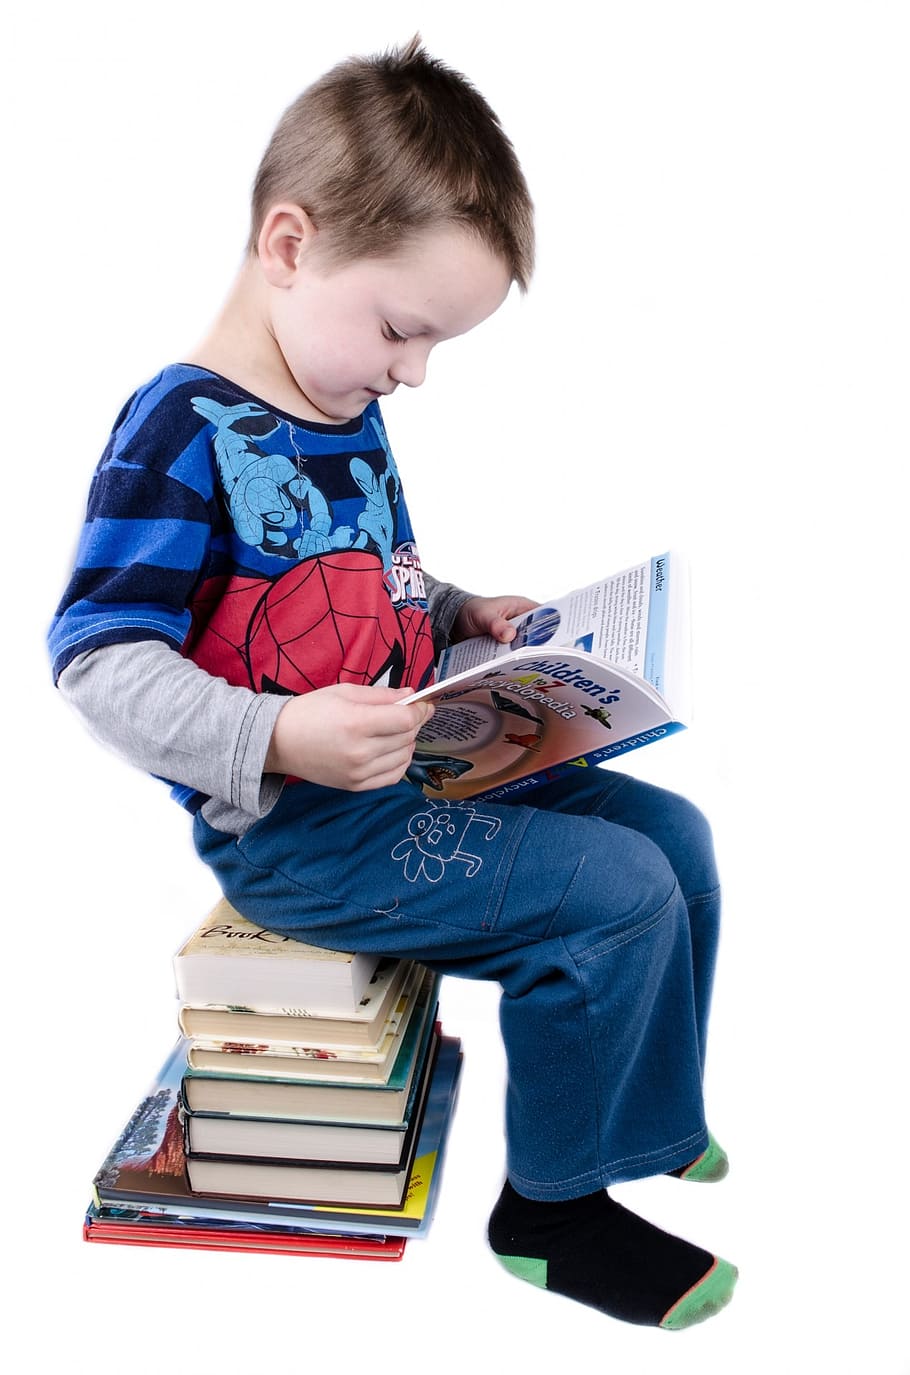 anak laki-laki, duduk, membaca buku, anak, buku, belajar, terisolasi, pendidikan, kebijaksanaan, anak prasekolah